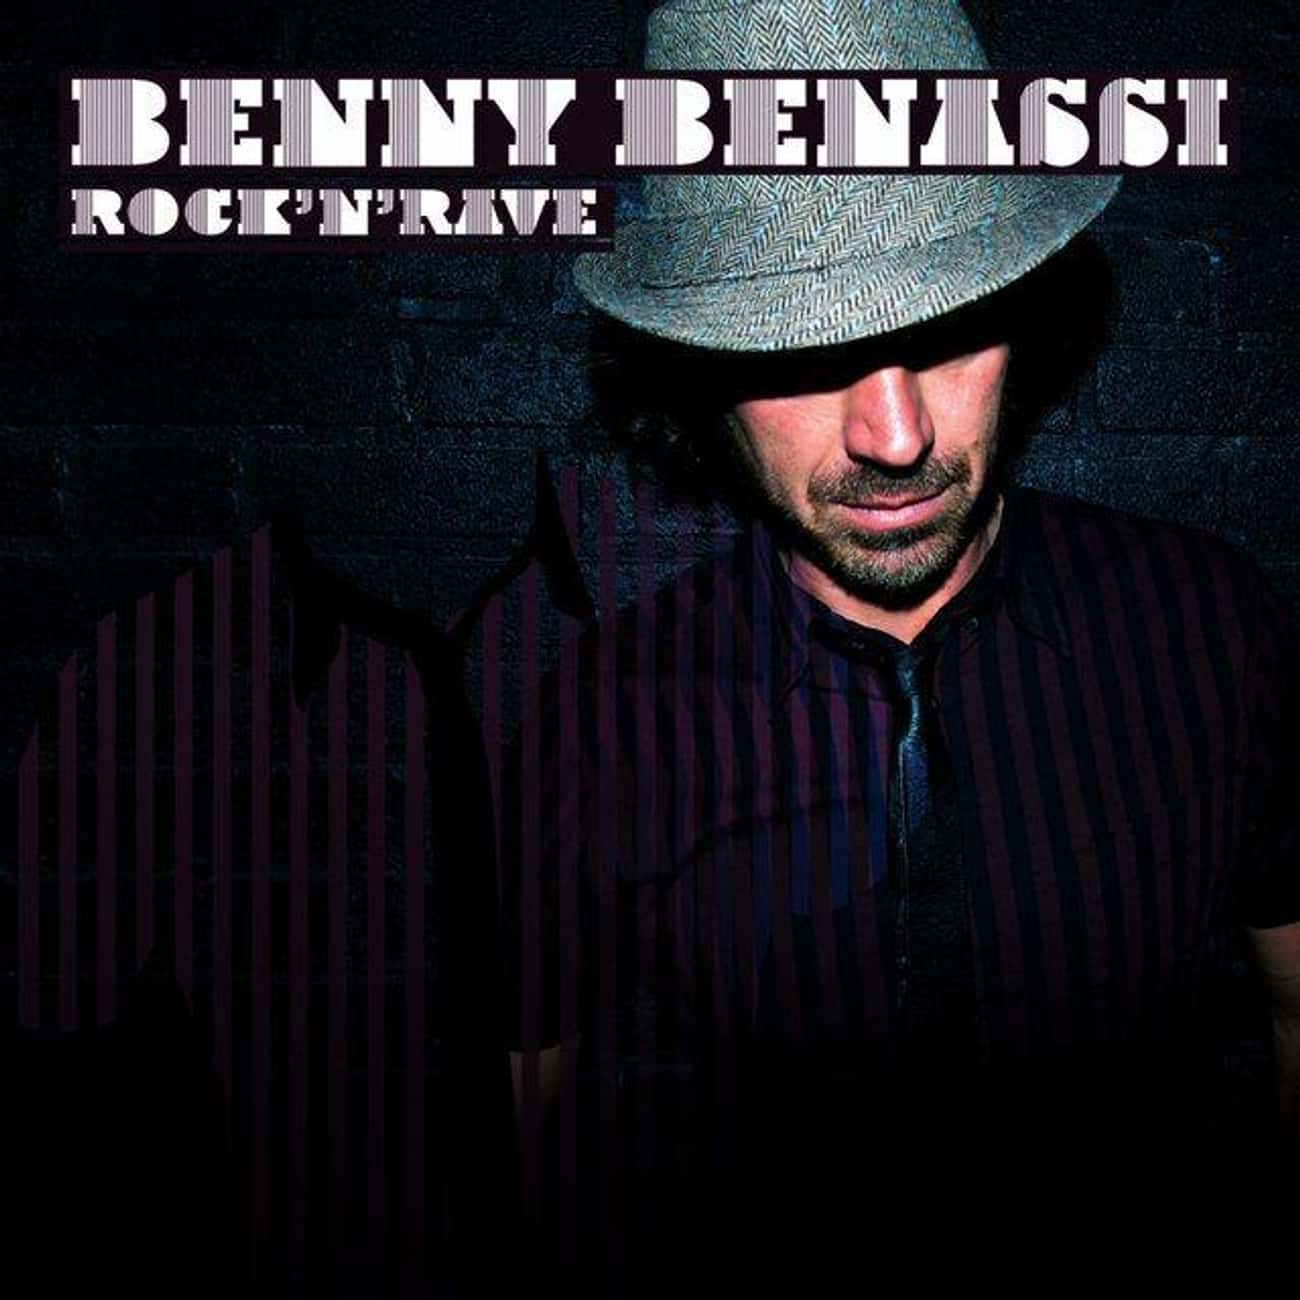 Benassi daddy. Benny Benassi. Benny Benassi Rock ’n’ Rave. Benny Benassi album. Бенни бенасси фото.